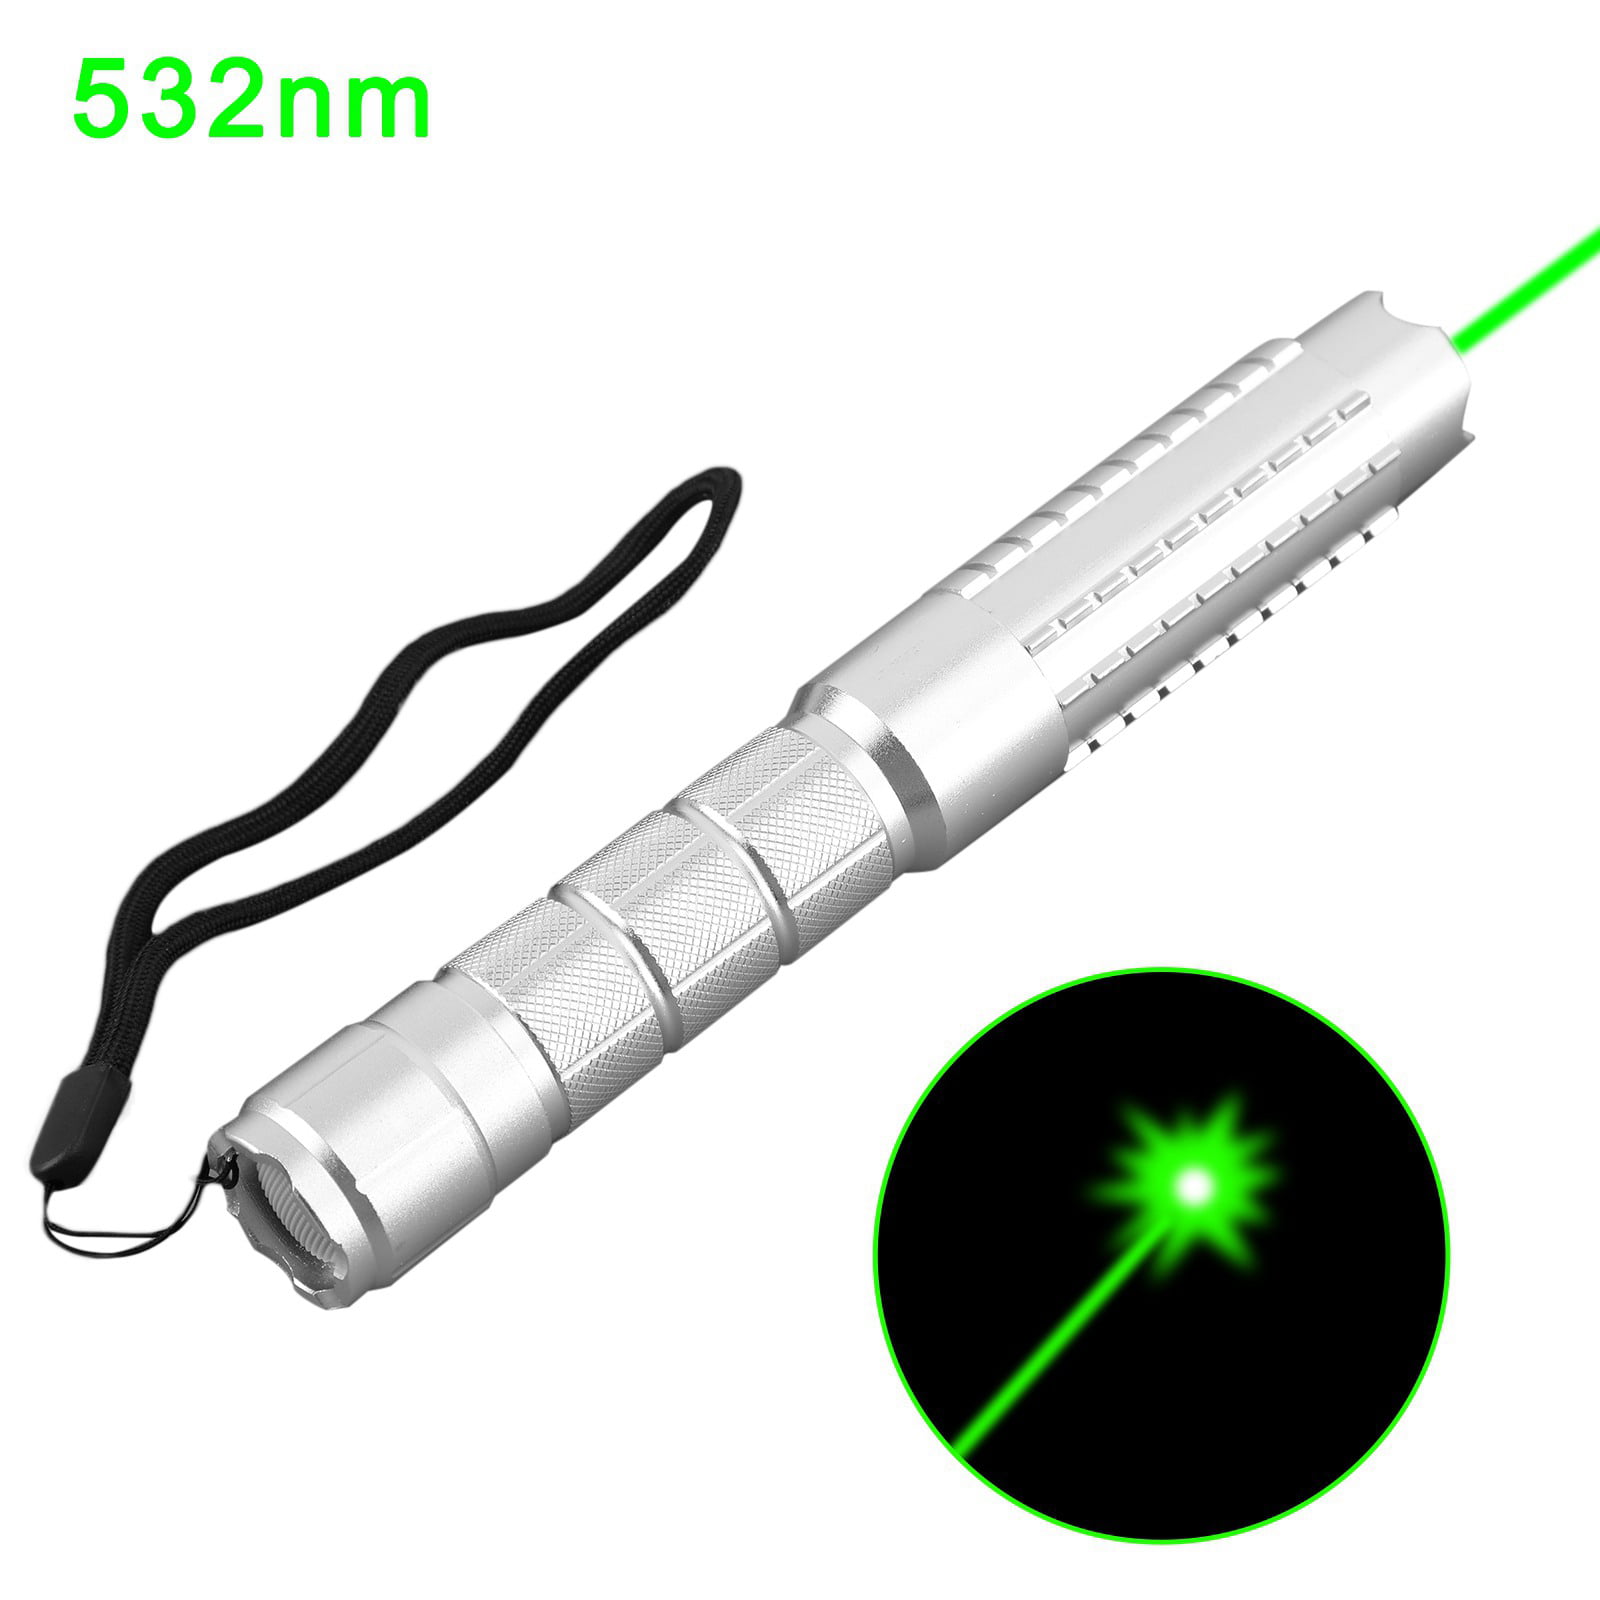 1mW 532NM Green Beam 50miles Laser Lazer Light Pointer Pen Powerful Visible Beam